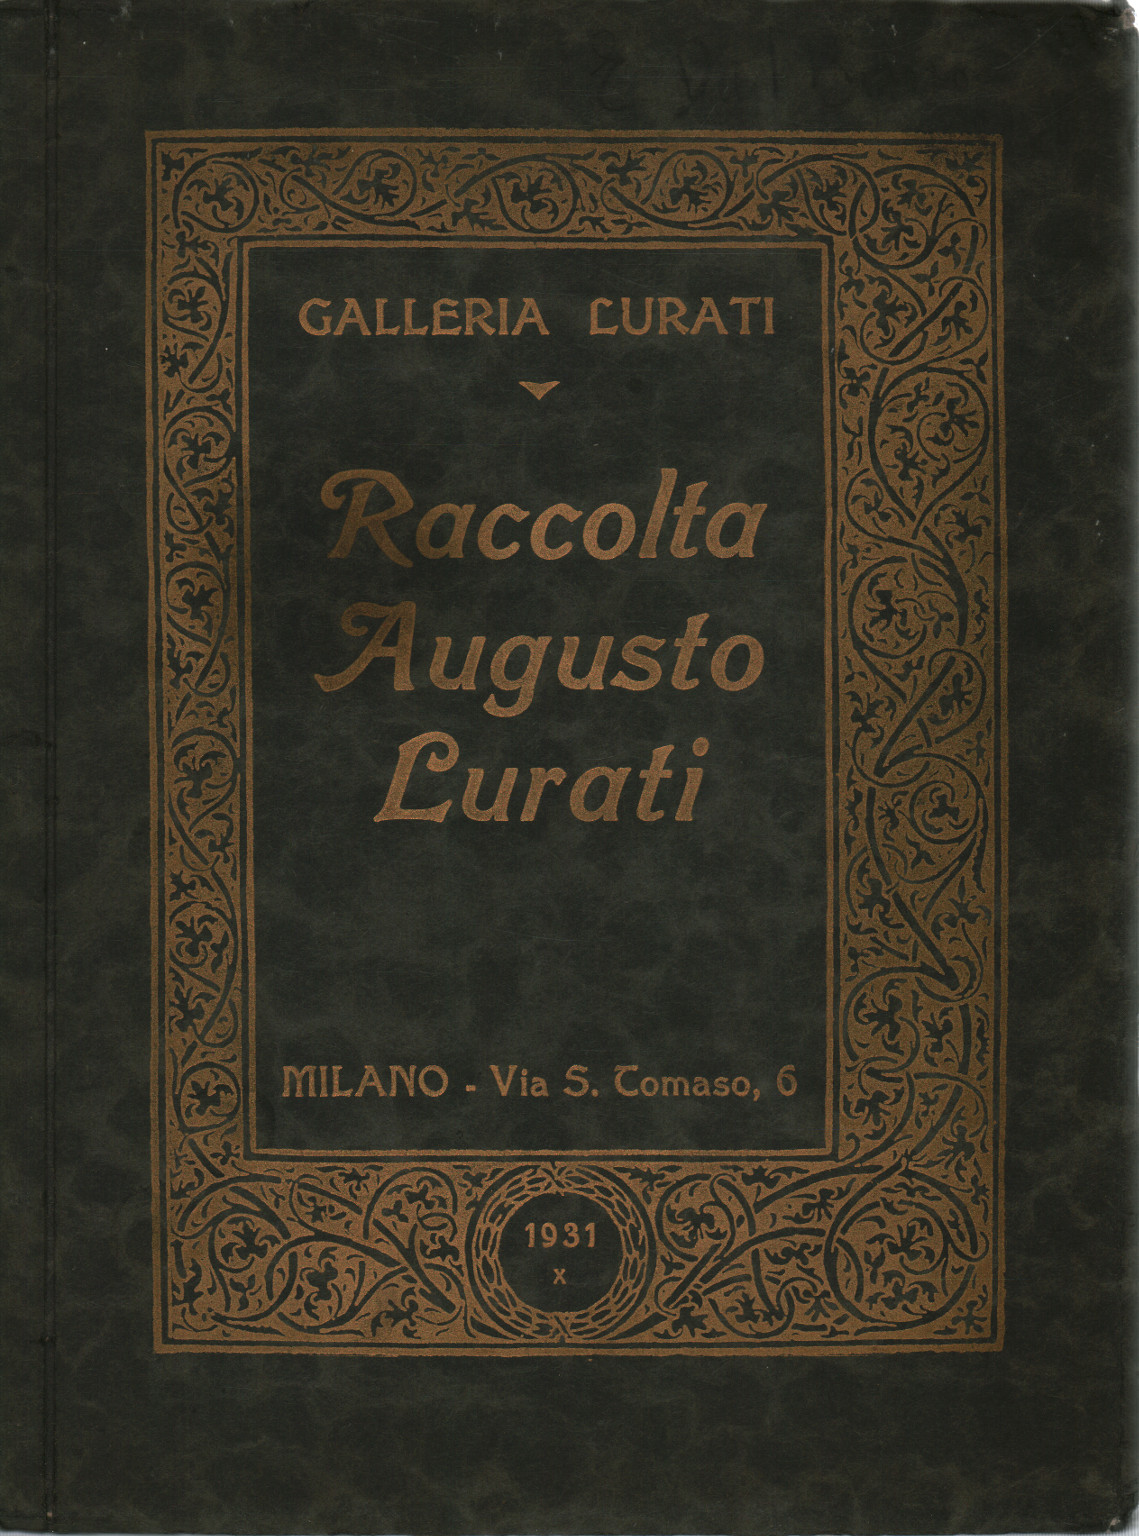 Sammlung Augusto Lurati, s.a.